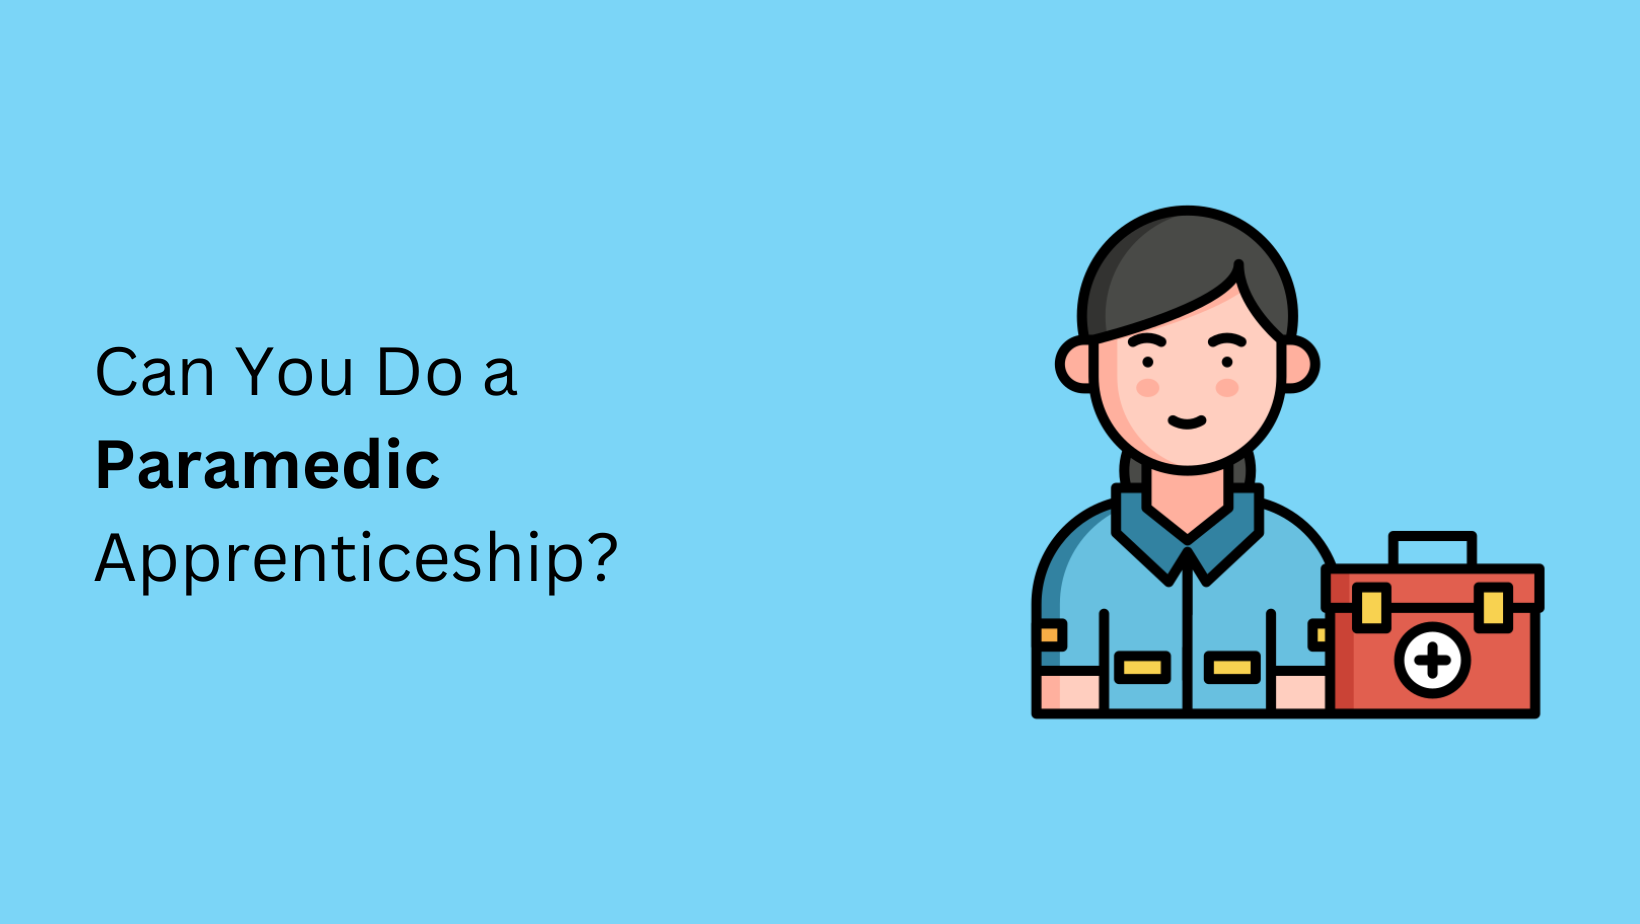 Can You Do a Paramedic Apprenticeship